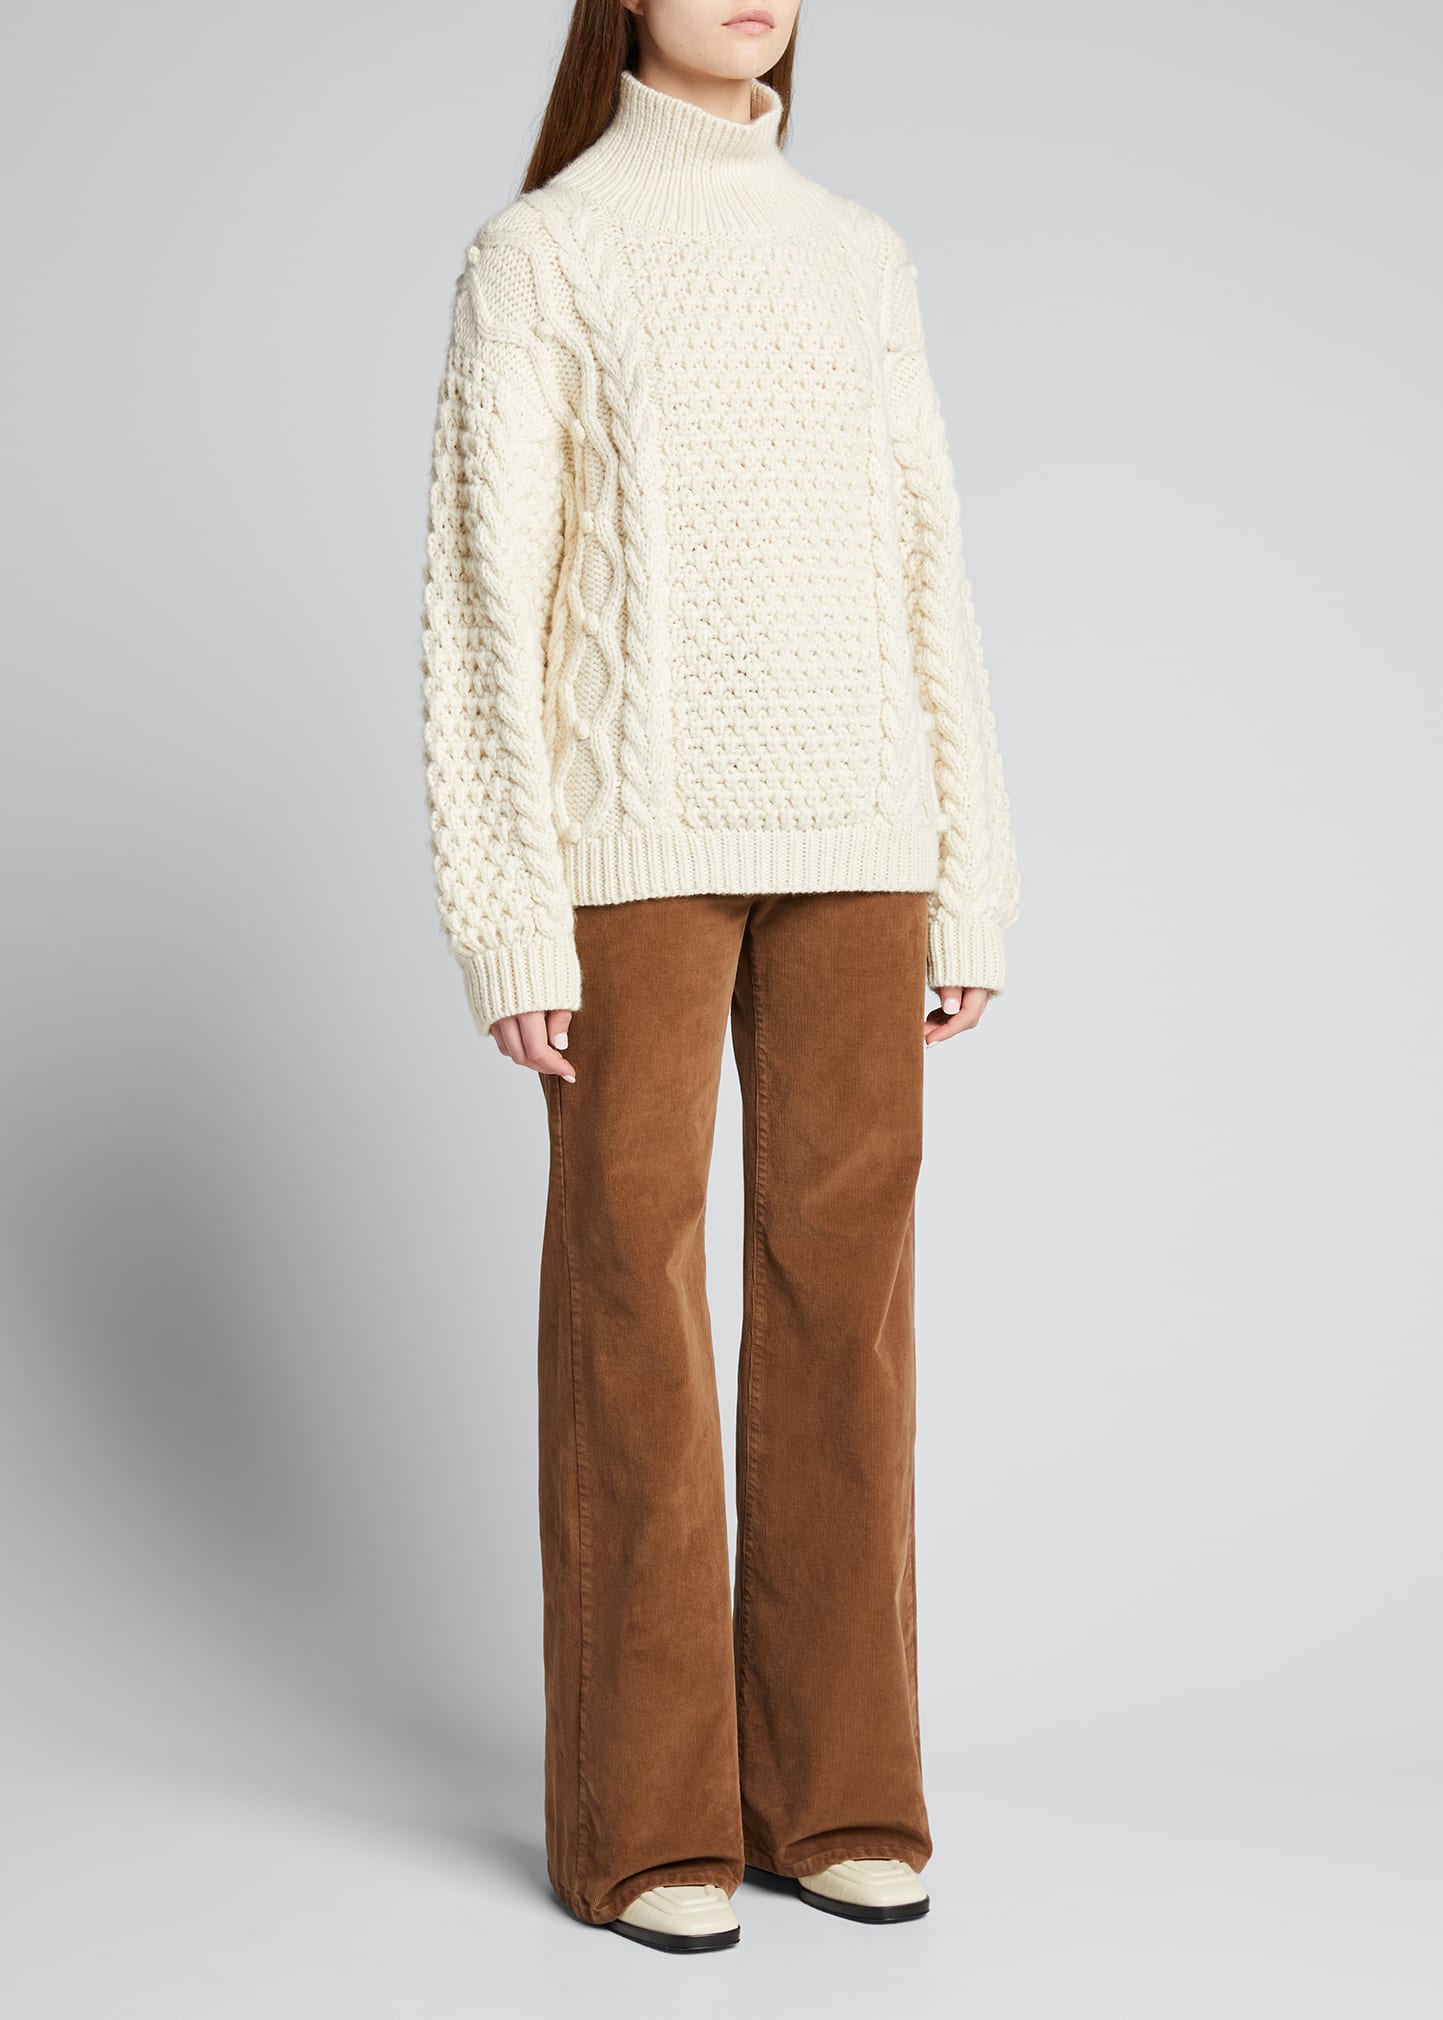 Nili Lotan Hawthorn Wool Turtleneck Sweater